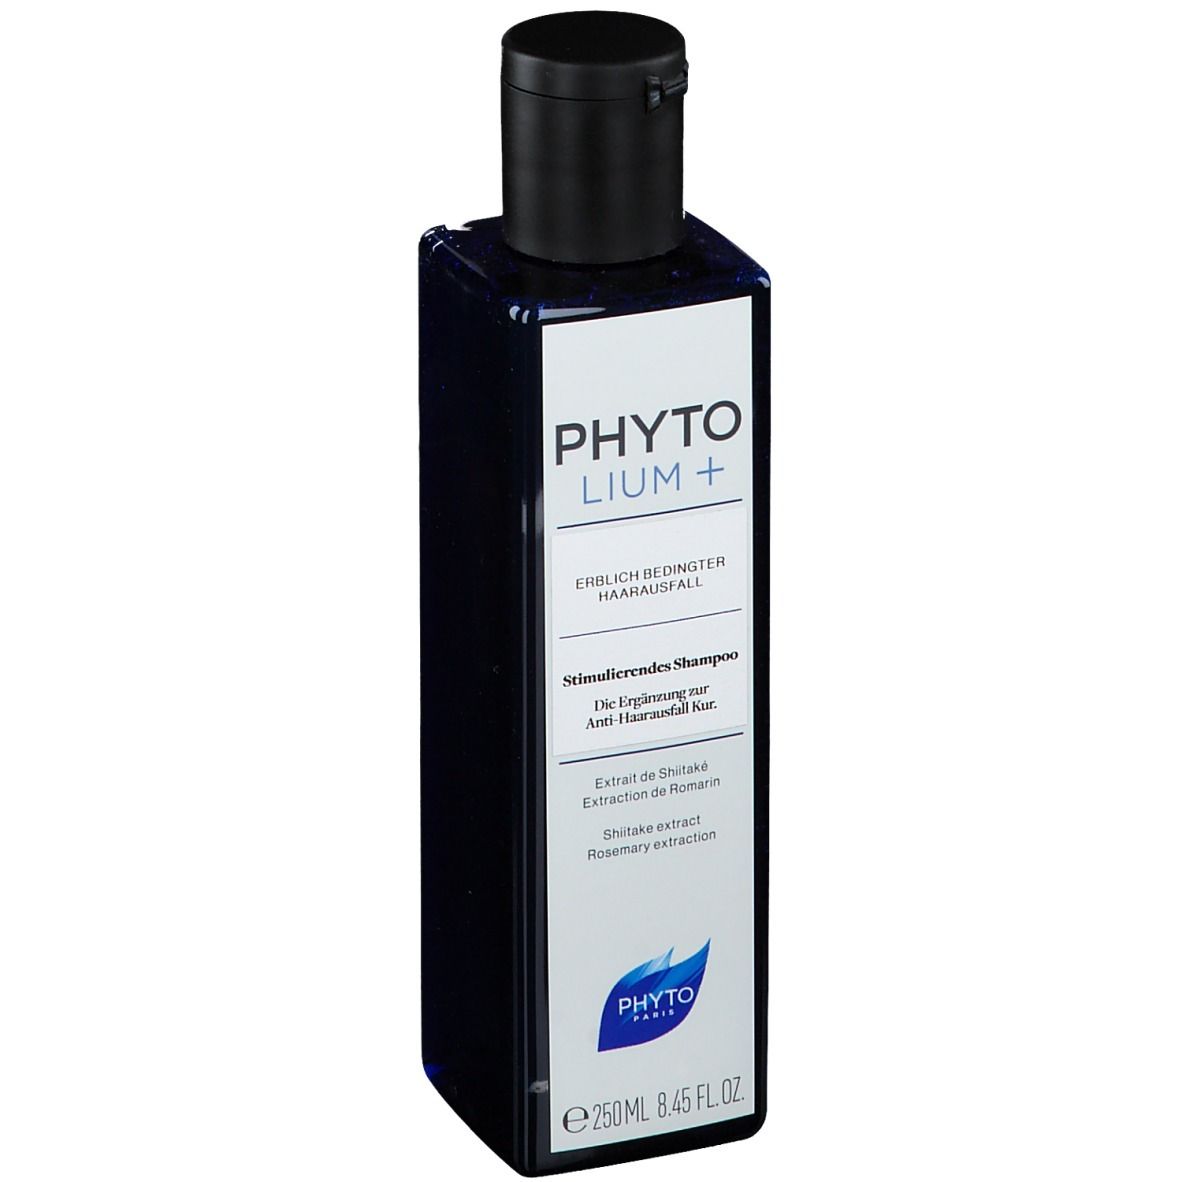 PHYTOLIUM+ Anti-Haarausfal Shampoo